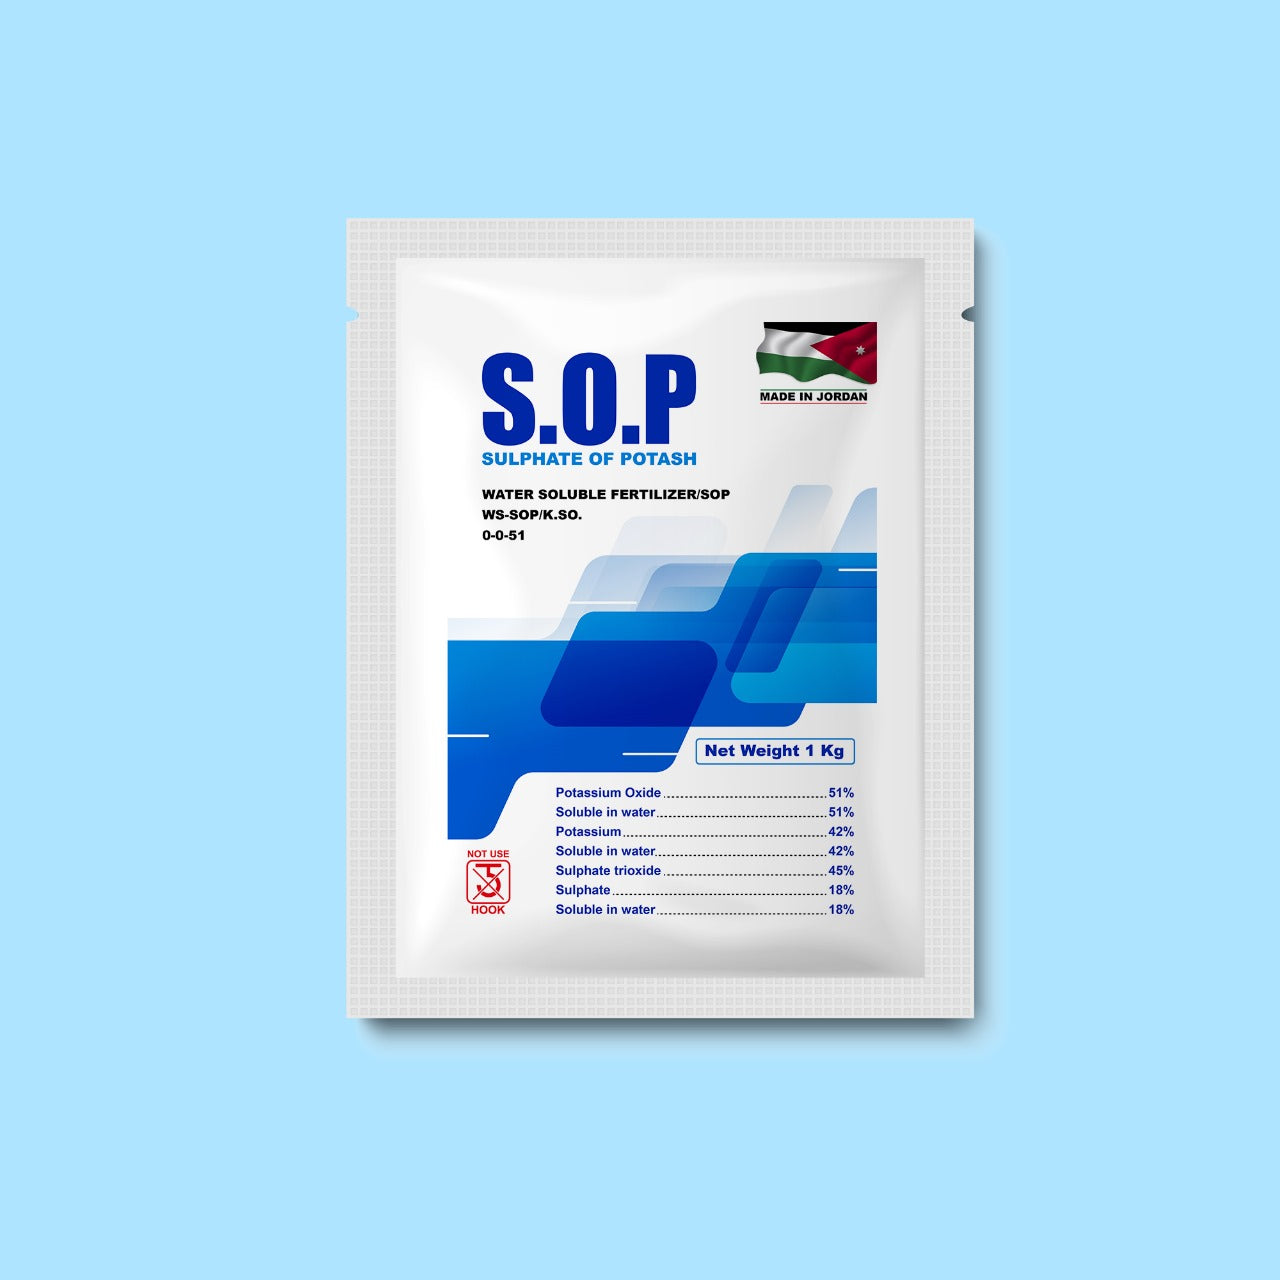 S.O.P Potasium Sulphate MADE IN JORDAN - 1 kg pack